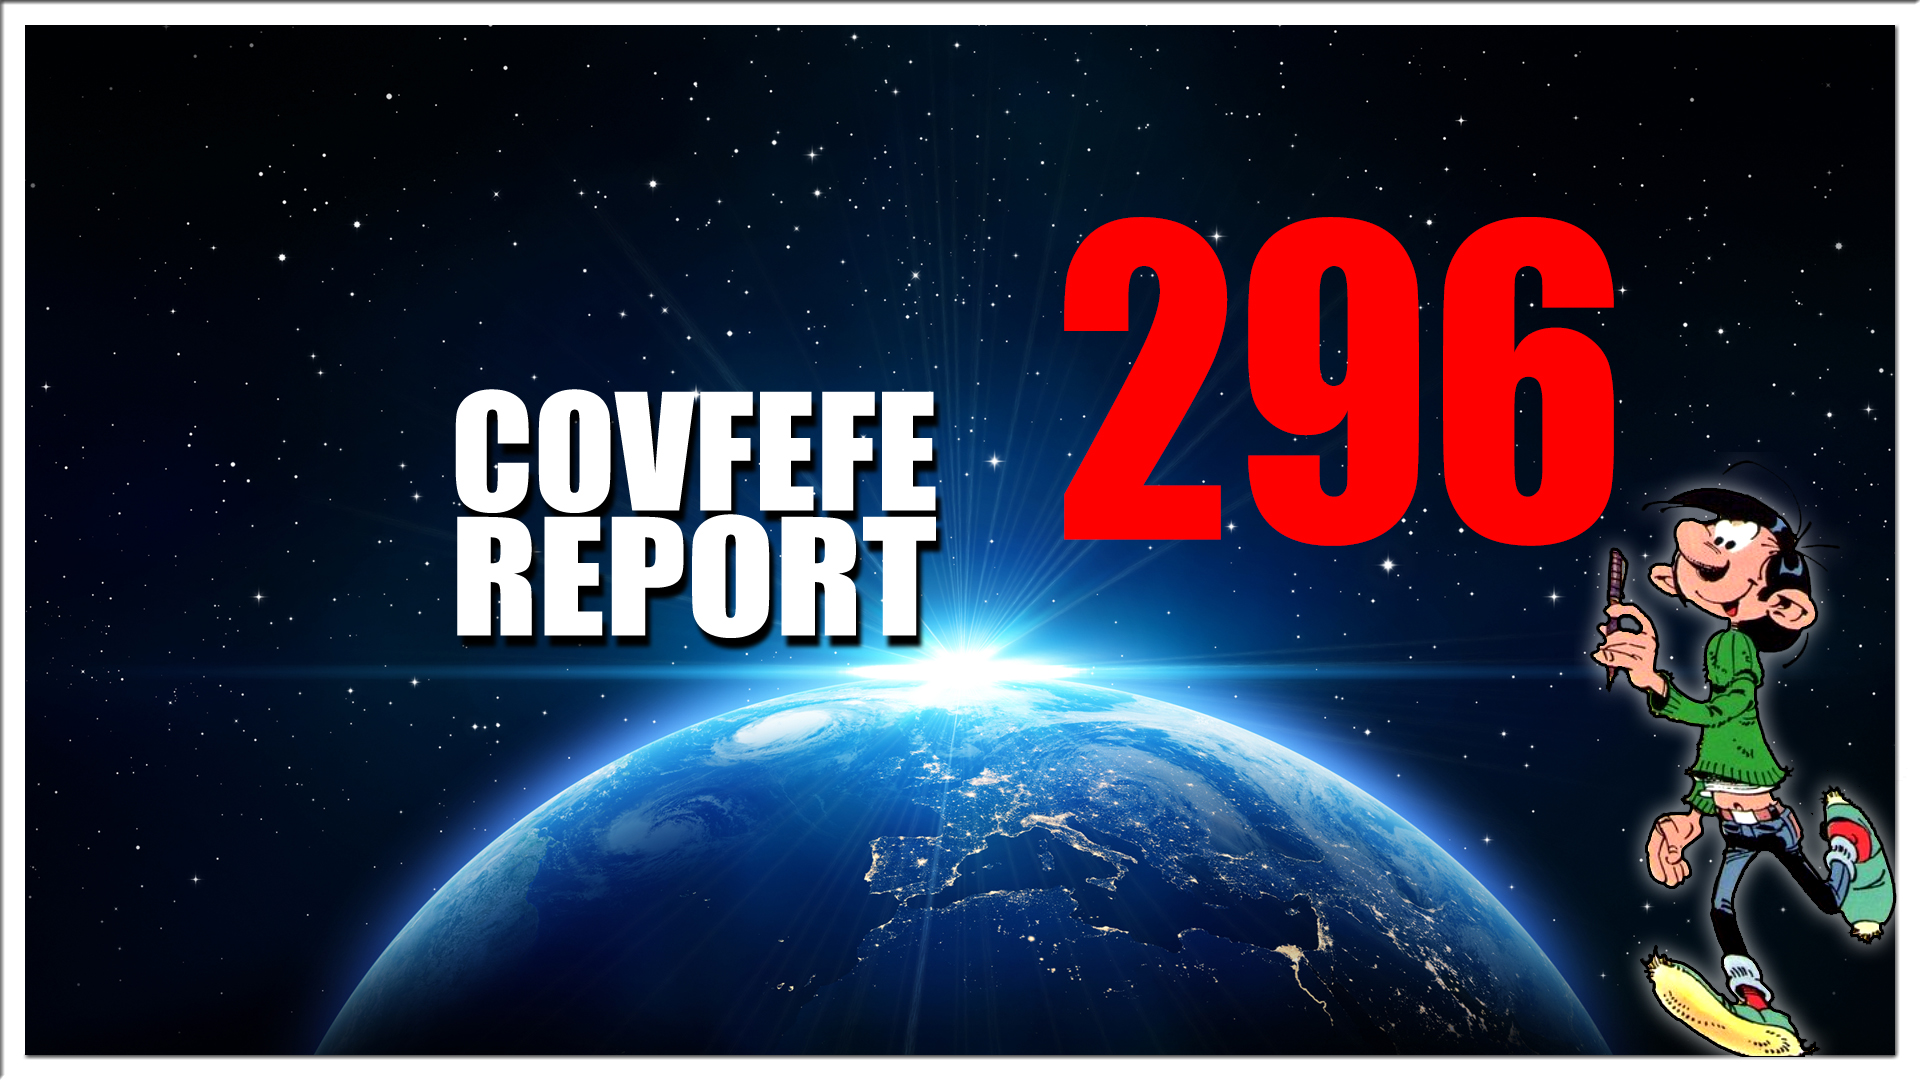 Covfefe Report 296. Bigger than you can imagine, Memes at ready